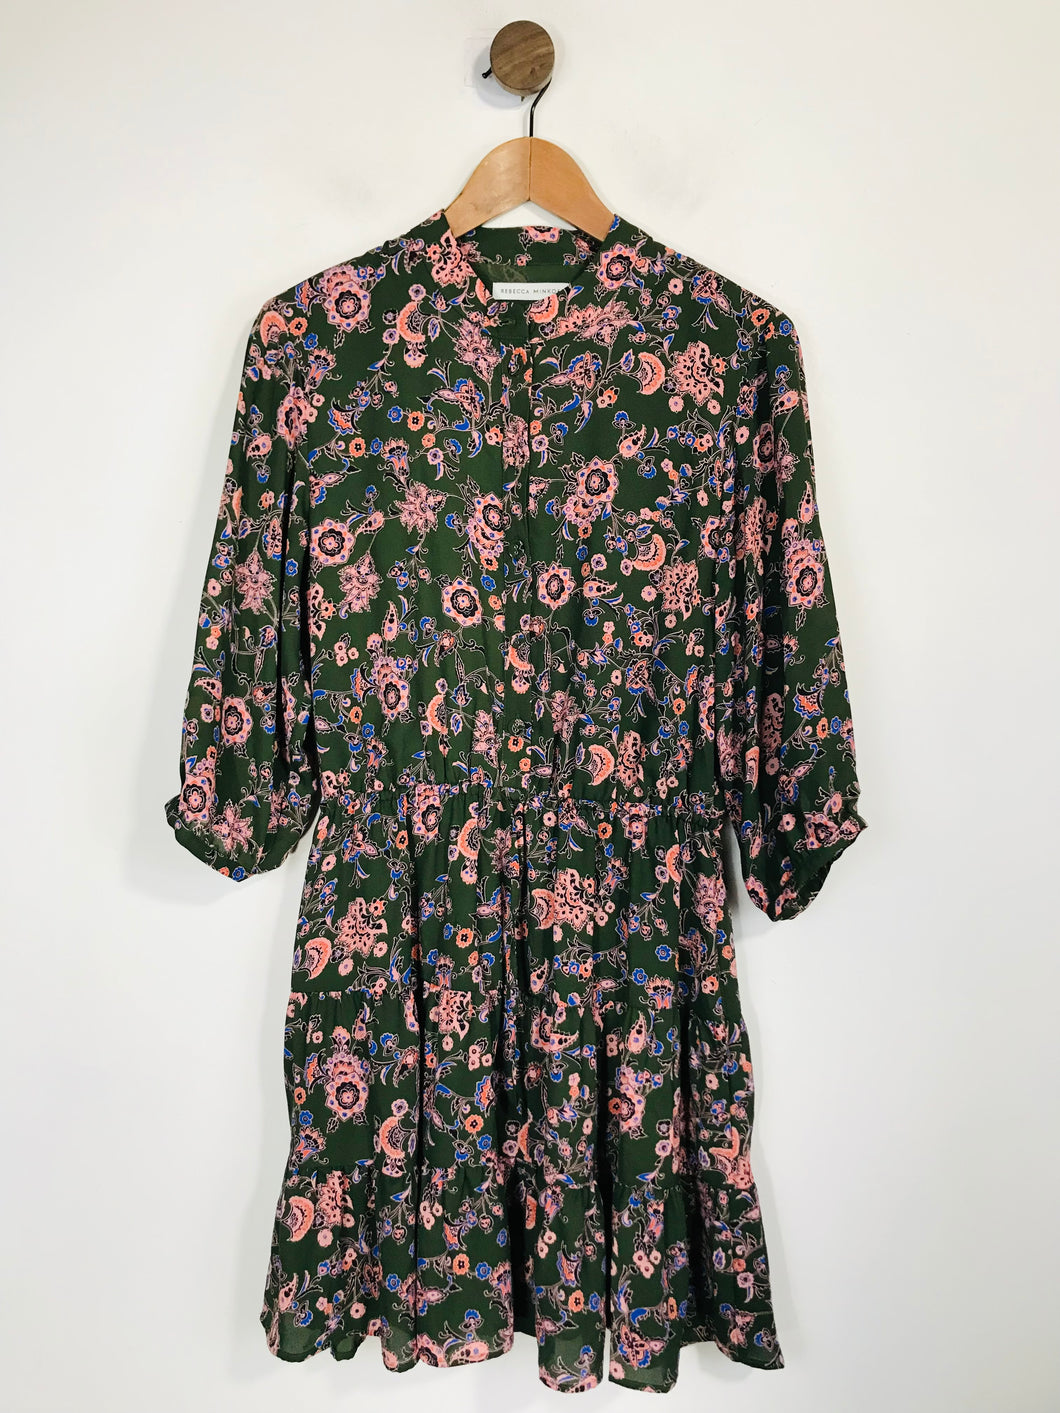 Rebecca Minkoff Women's Paisley A-Line Dress | M UK10-12 | Green